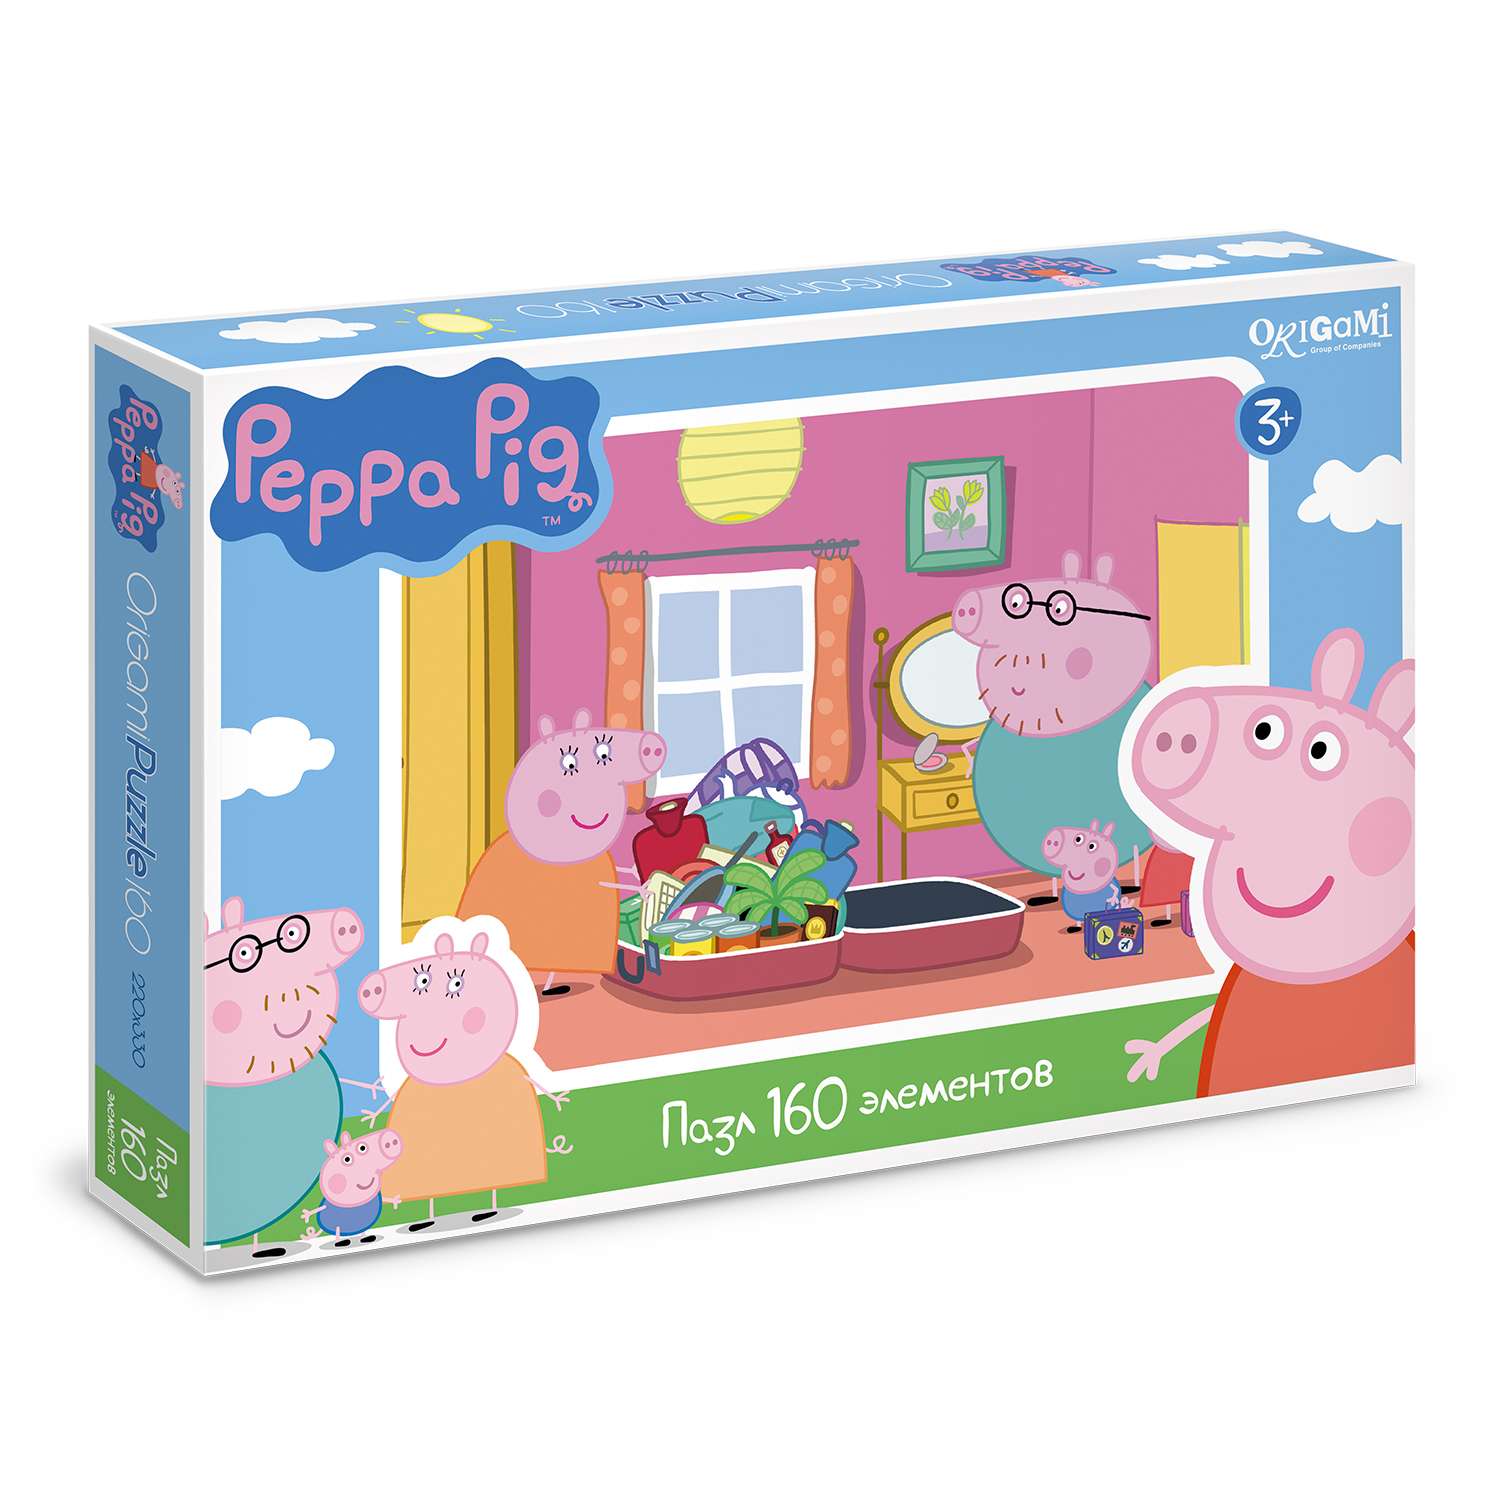 Пазлы ORIGAMI Peppa Pig 160 эл. в ассортименте - фото 2